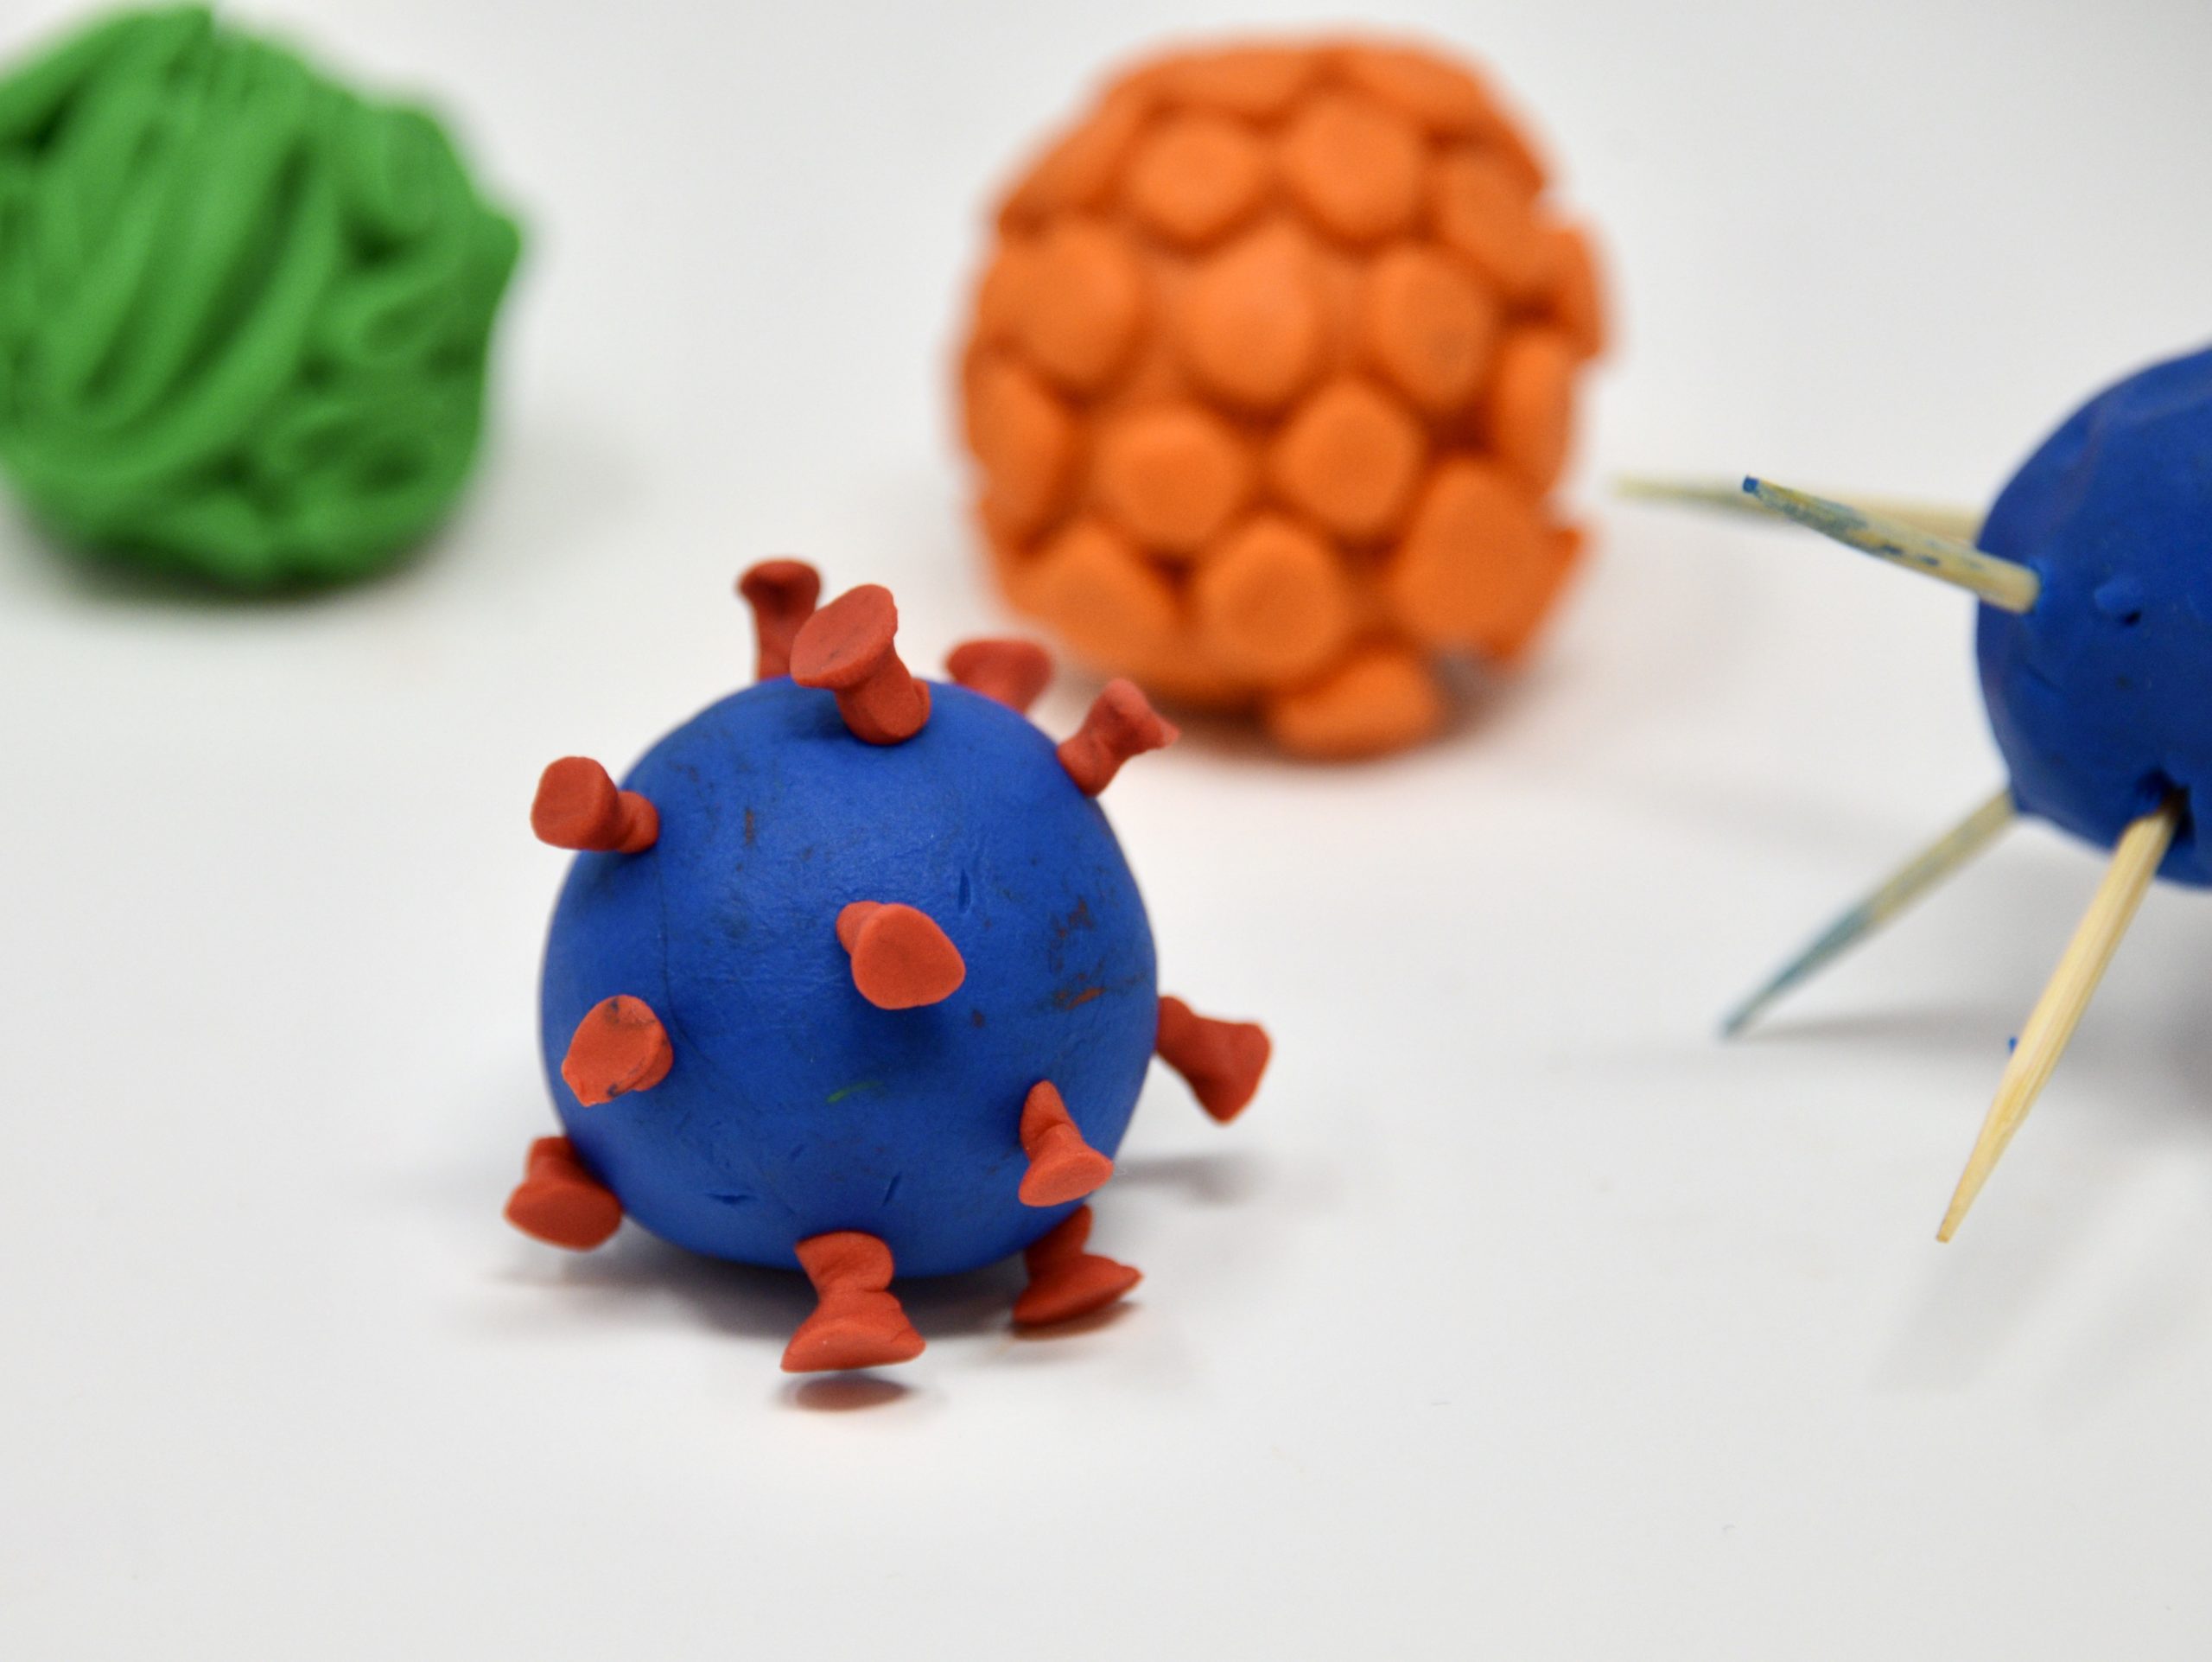 Easy Virus Models - Playdough Models of Ebola, Papillomavirus, ZIKA